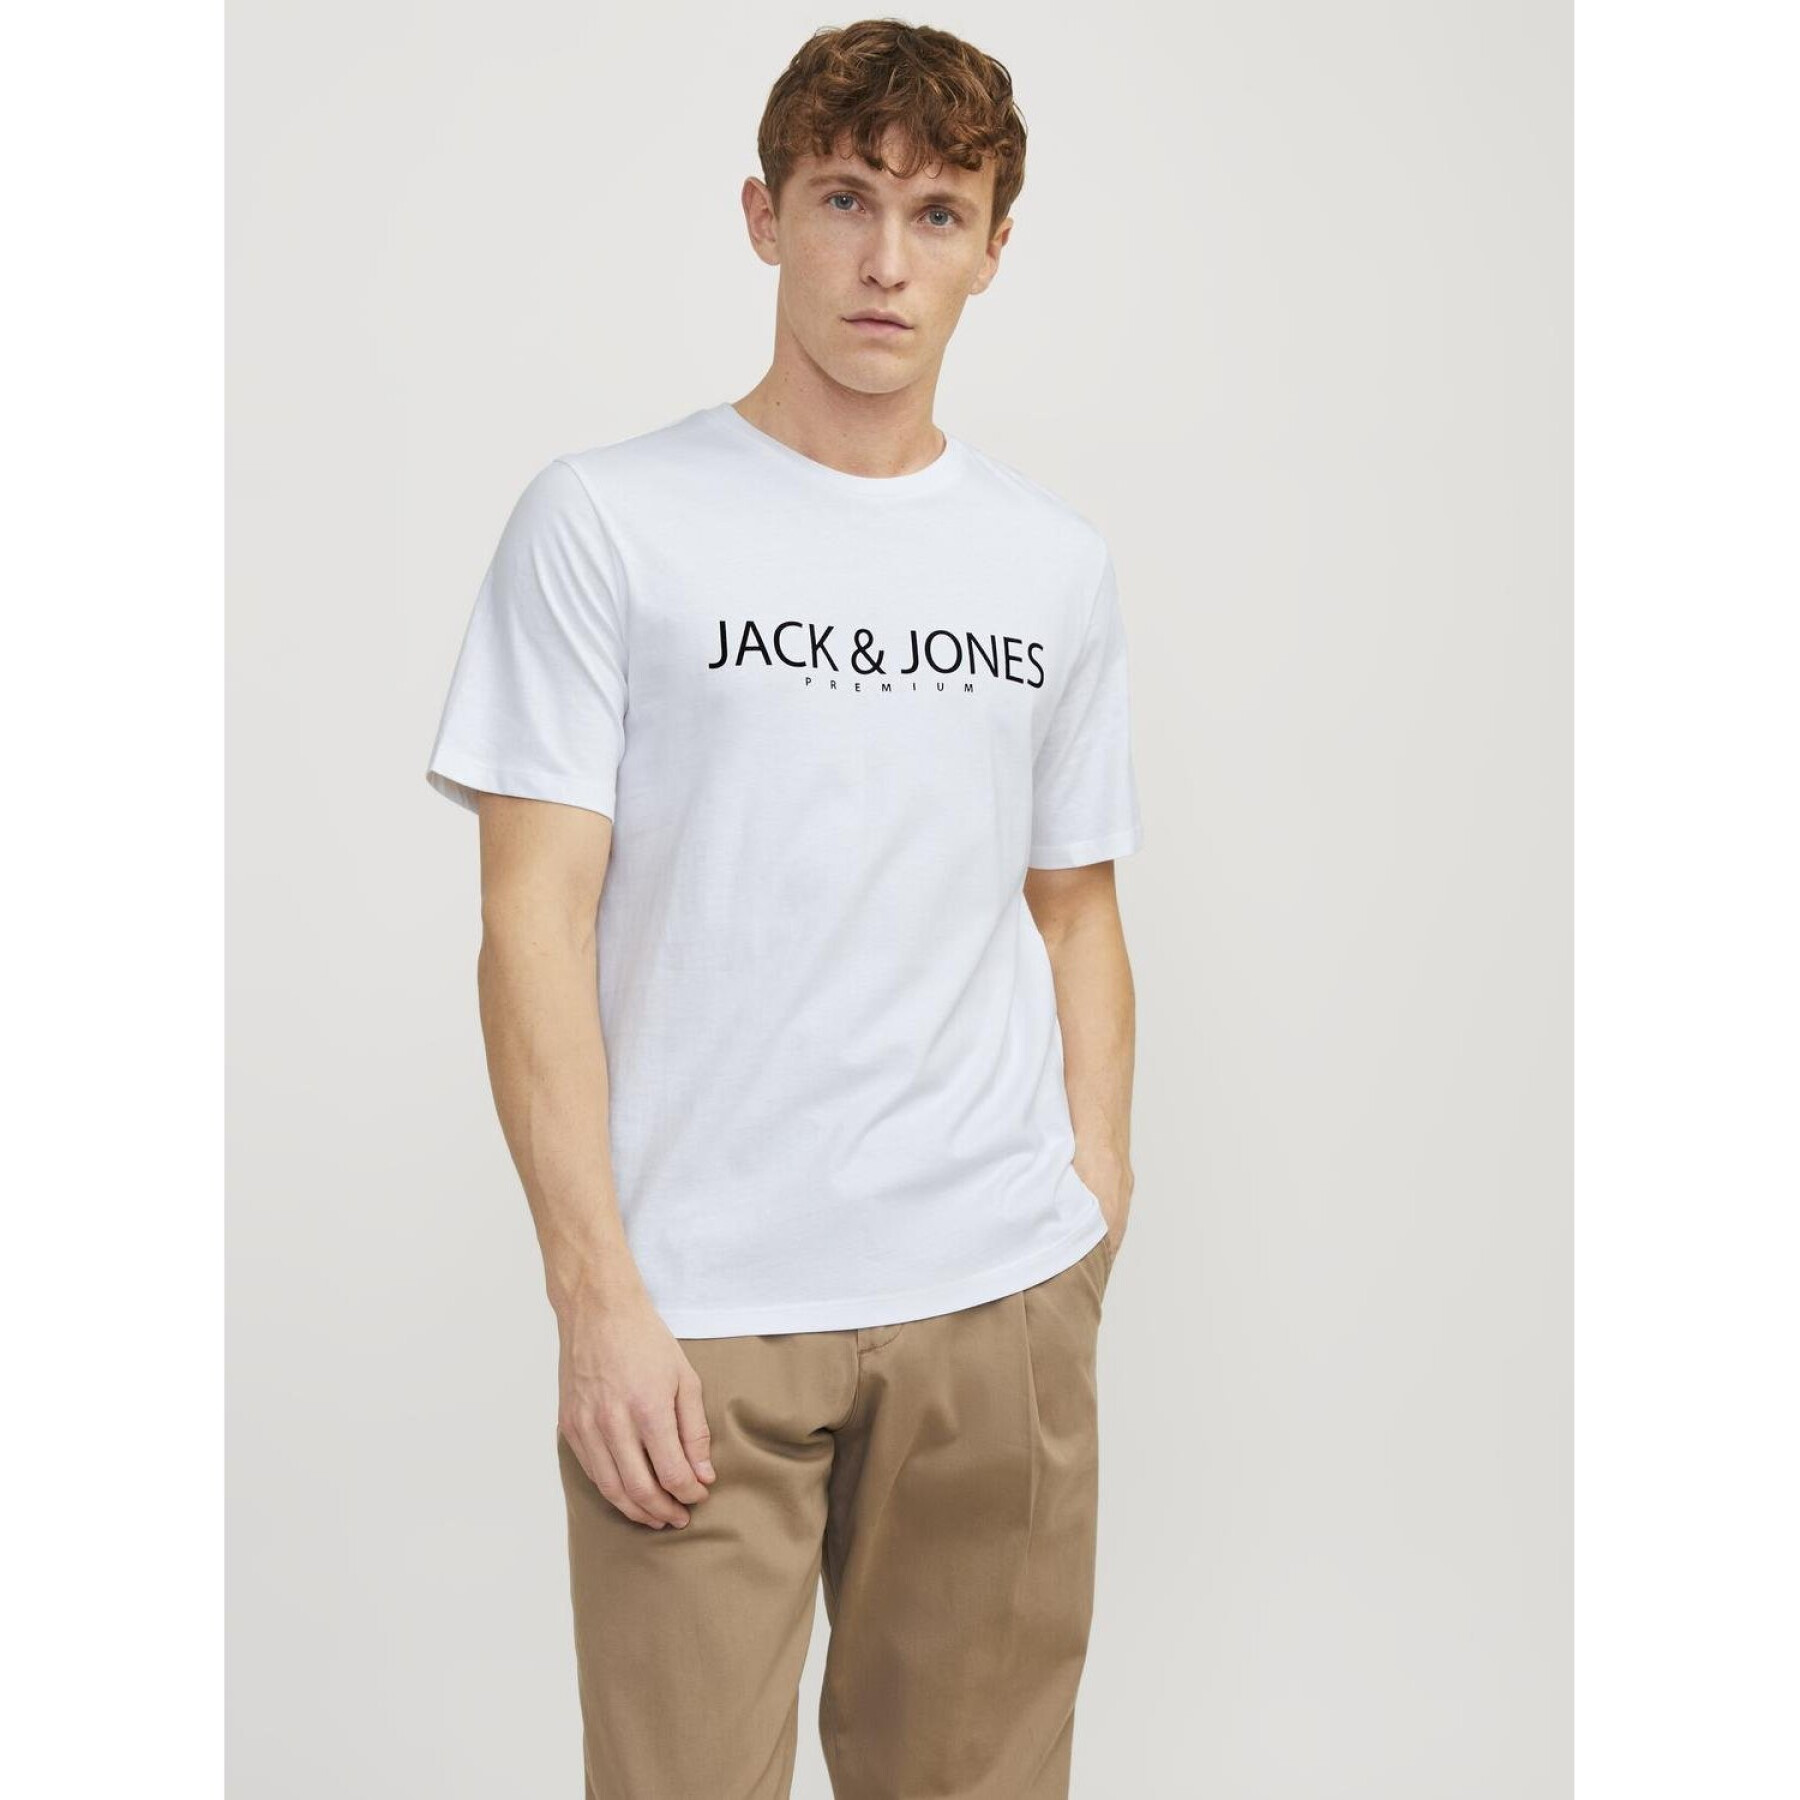 Camiseta Jack & Jones Blajack